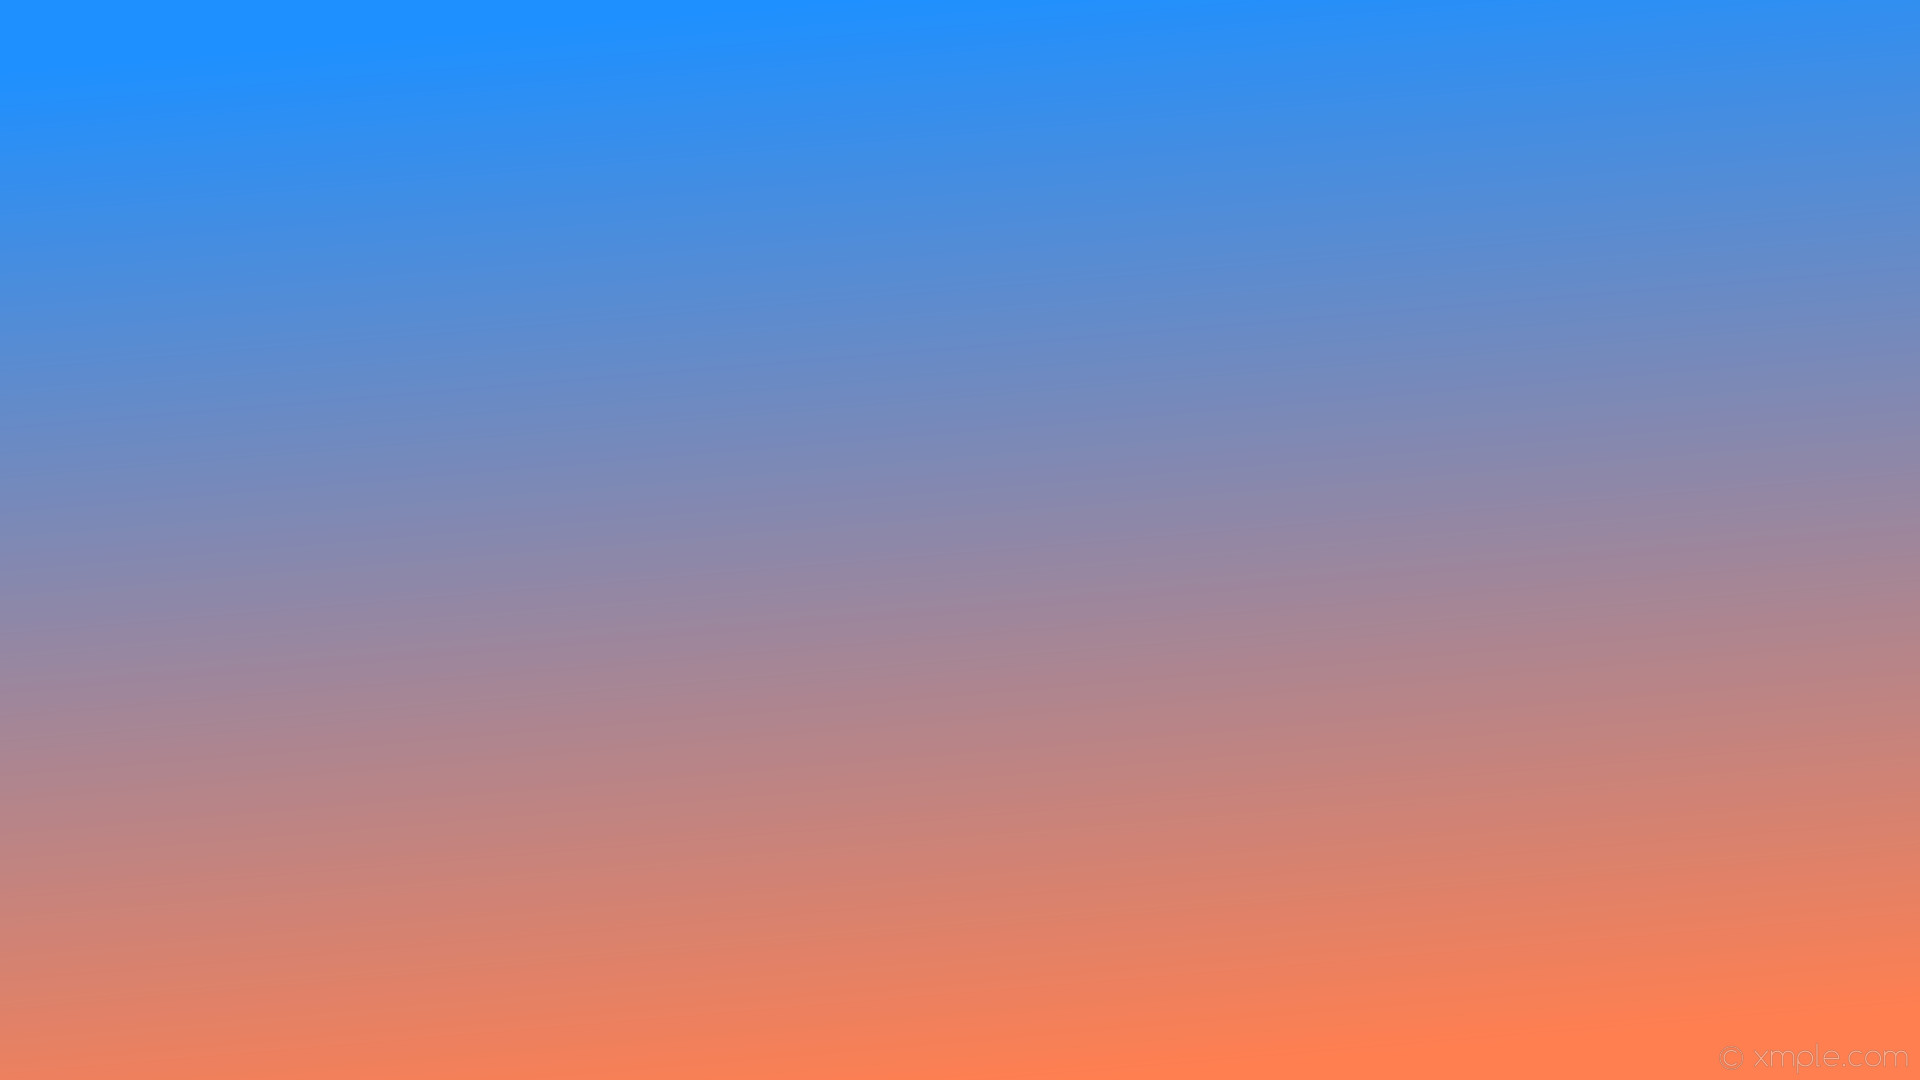 1920x1080 wallpaper gradient blue orange linear dodger blue coral #1e90ff #ff7f50 105Â°